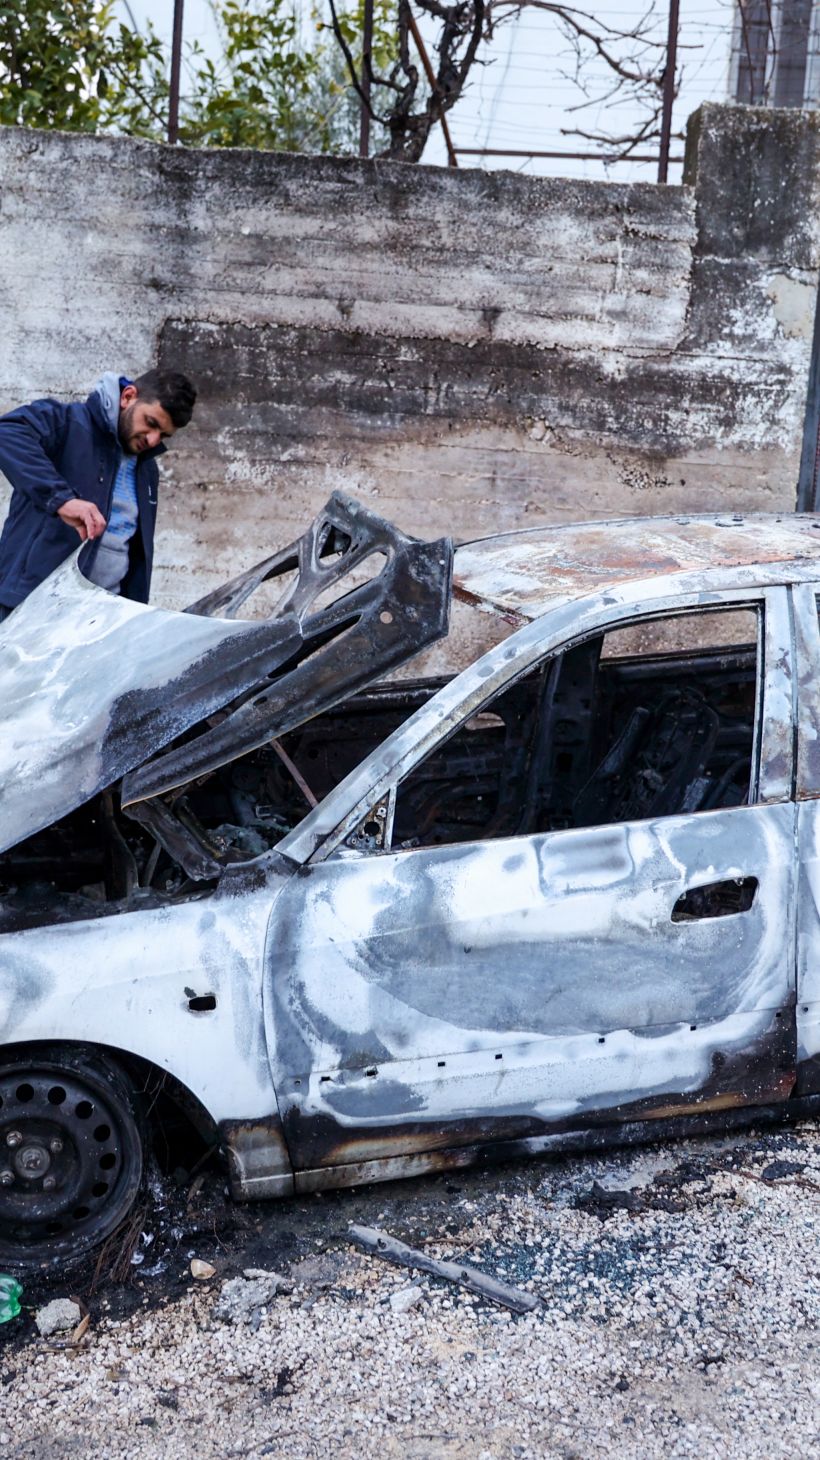 A Palestinian man inspects a car damaged